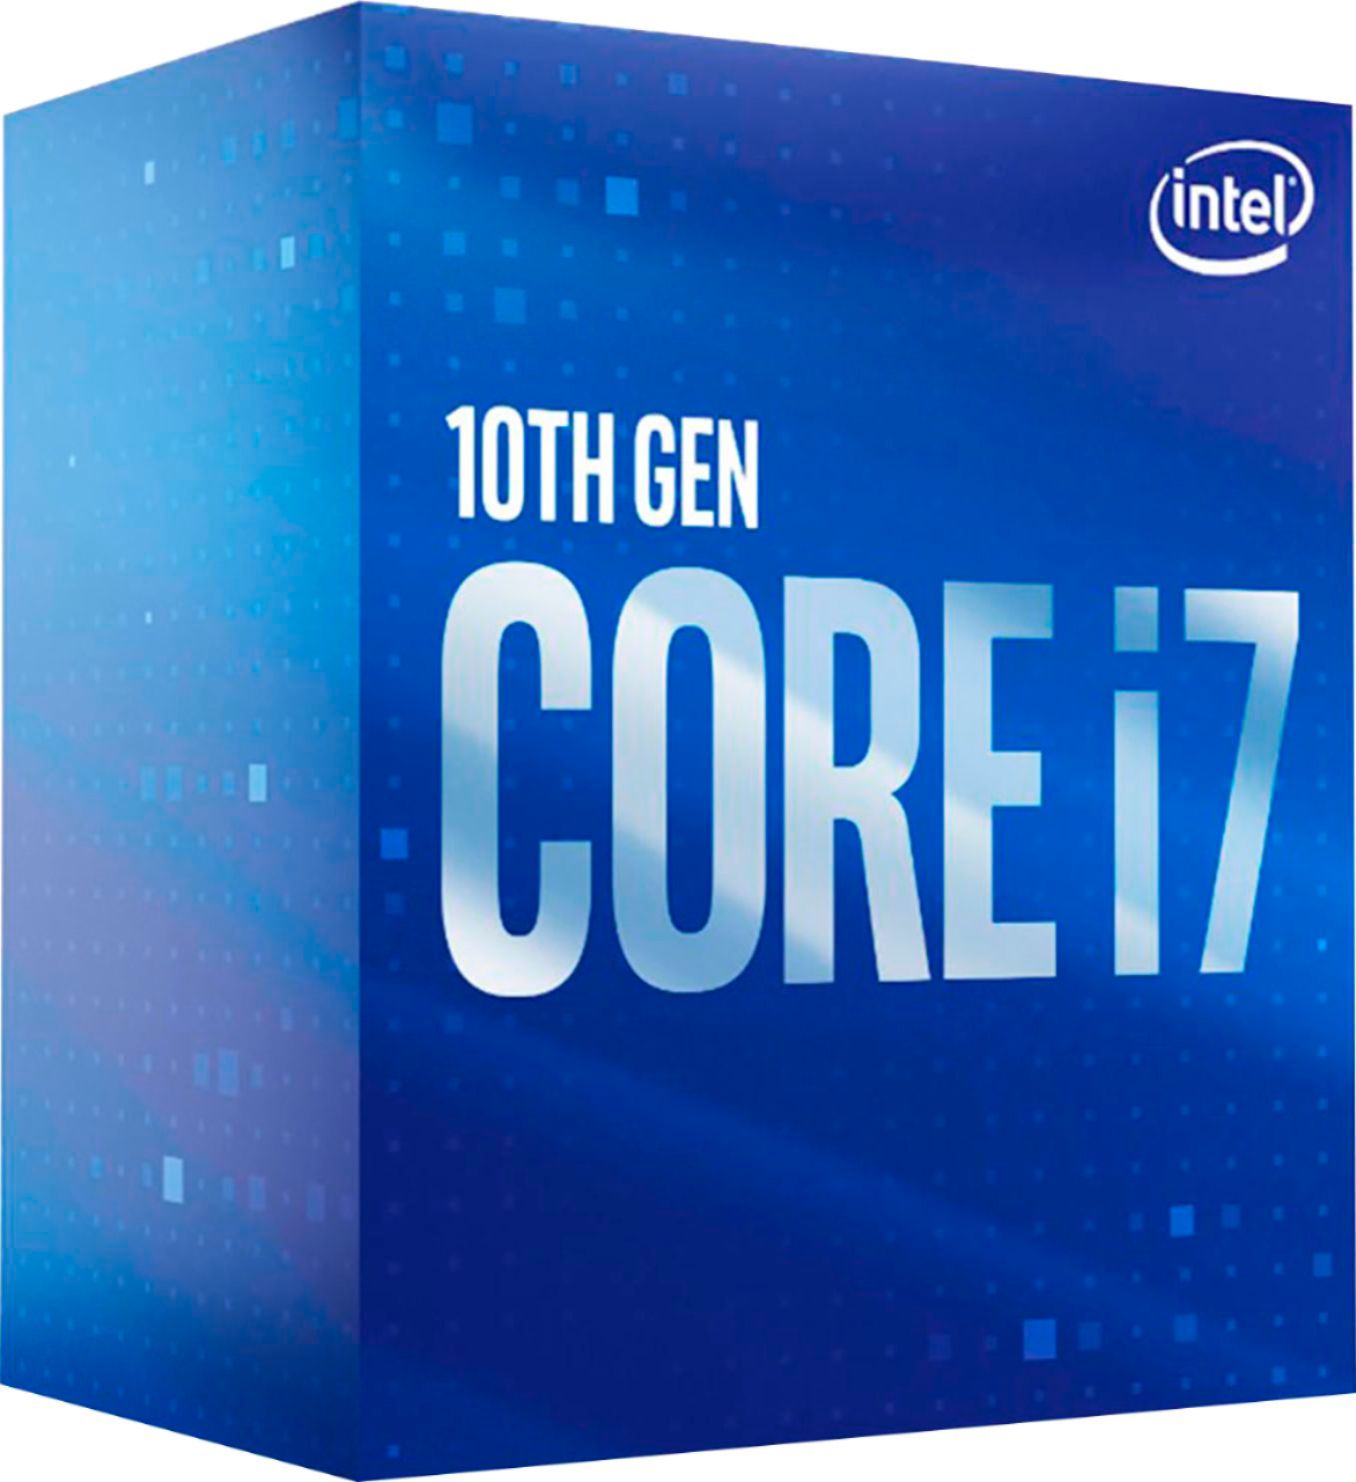 Intel Core i7-10700 10th Generation 8-Core 16-Thread 2.9 - Best Buy